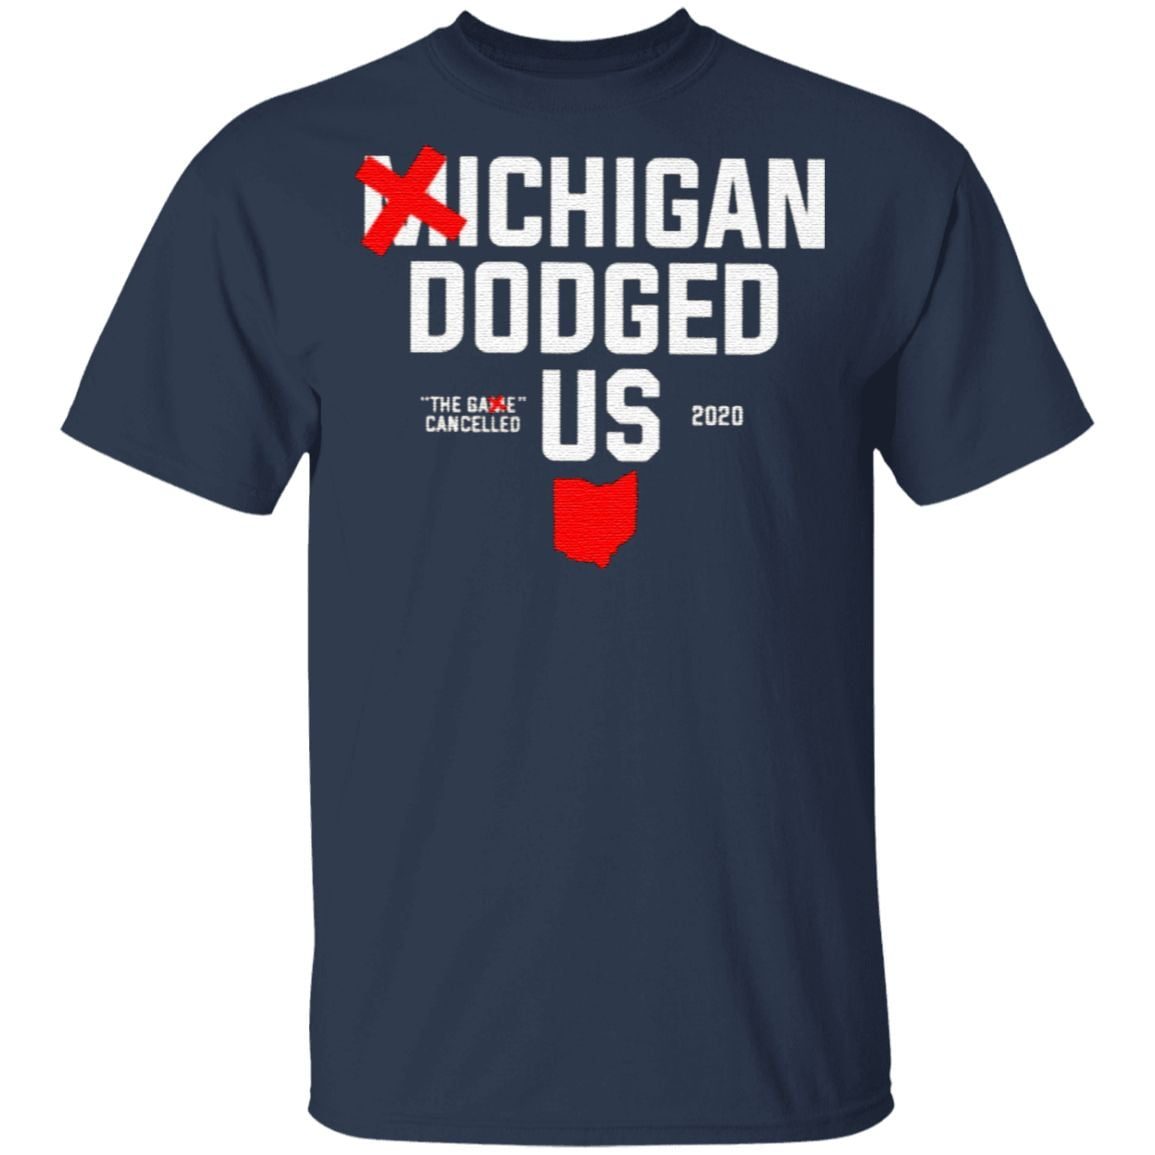 Michigan Dodged Us 2020 T Shirt